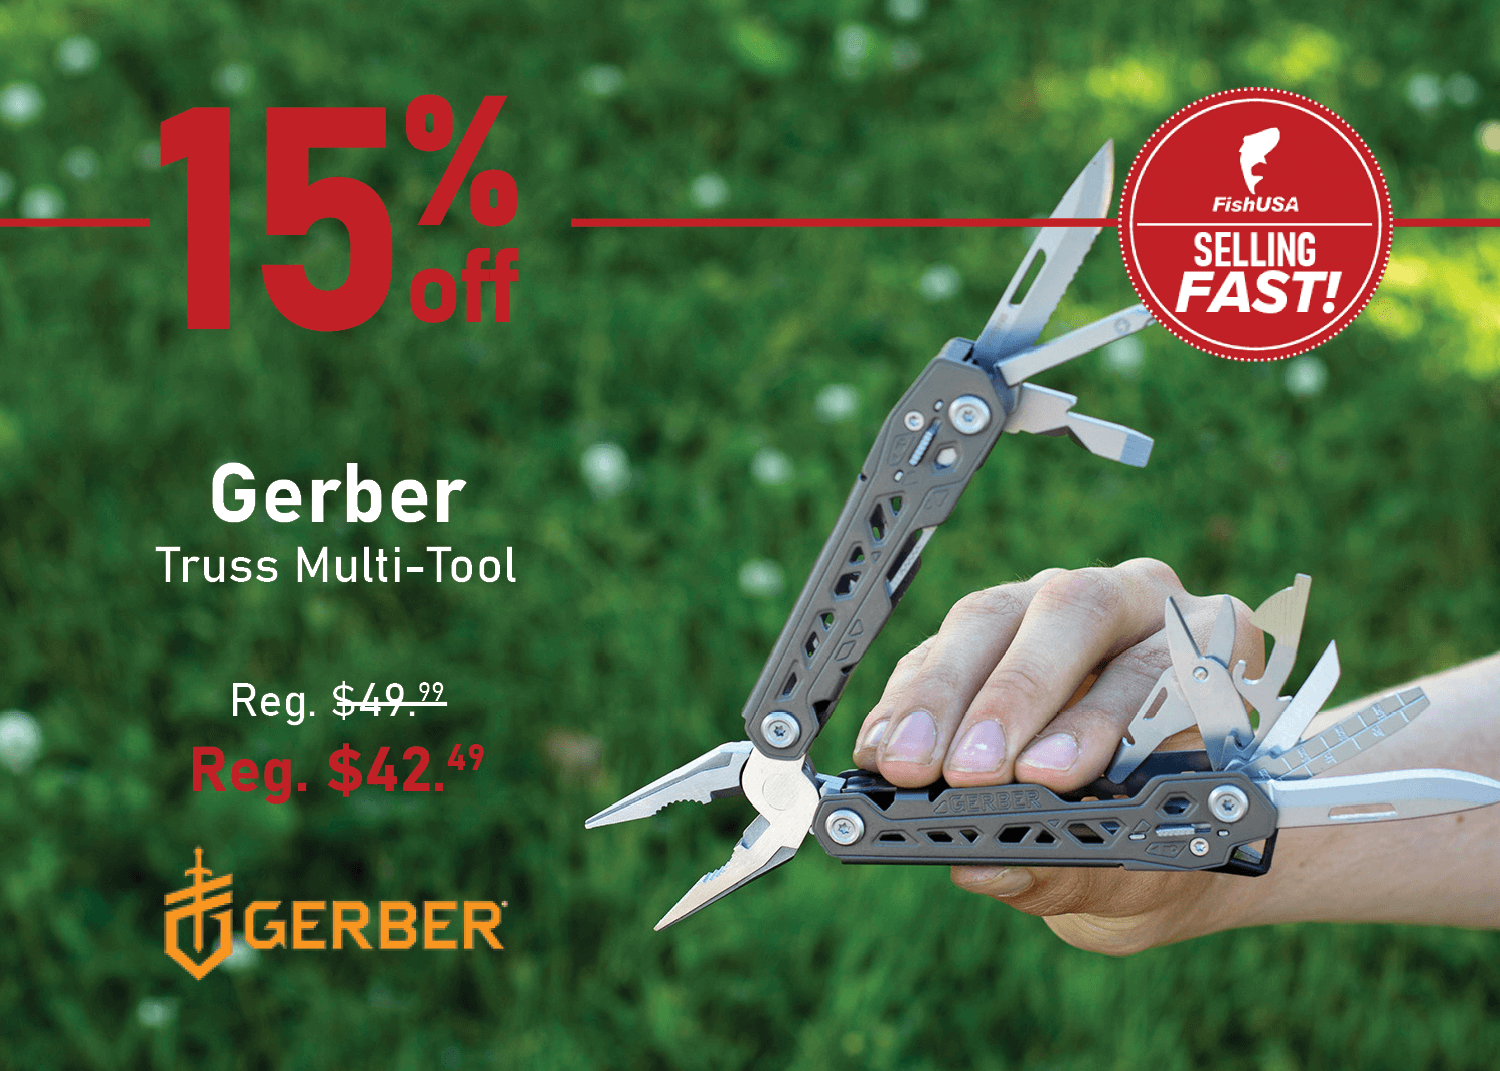 Save 15% on the Gerber Truss Multi-Tool